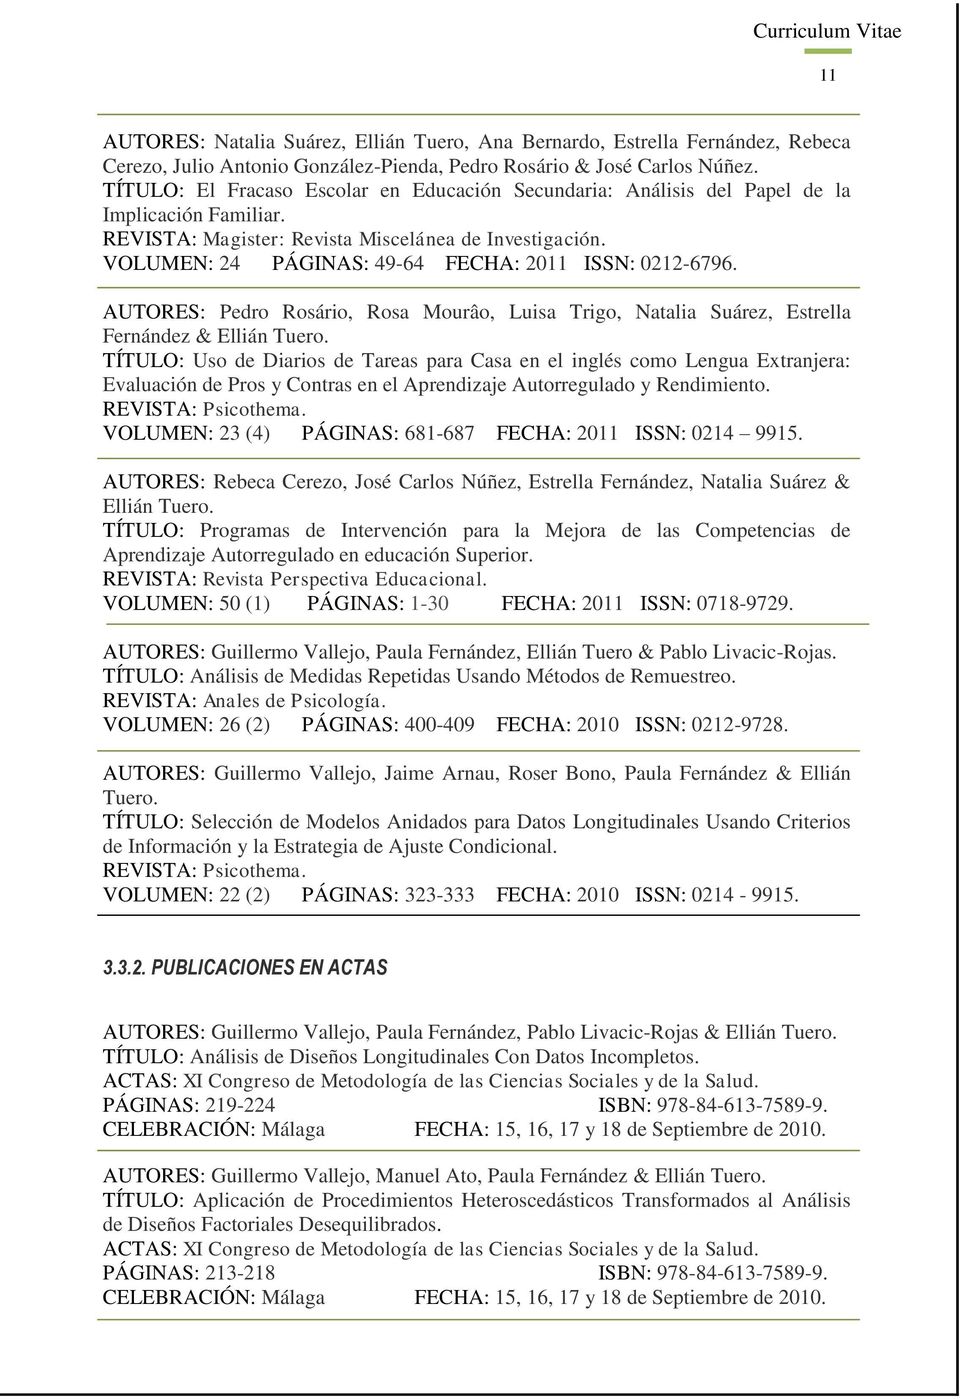 VOLUMEN: 24 PÁGINAS: 49-64 FECHA: 2011 ISSN: 0212-6796. AUTORES: Pedro Rosário, Rosa Mourâo, Luisa Trigo, Natalia Suárez, Estrella Fernández & Ellián Tuero.